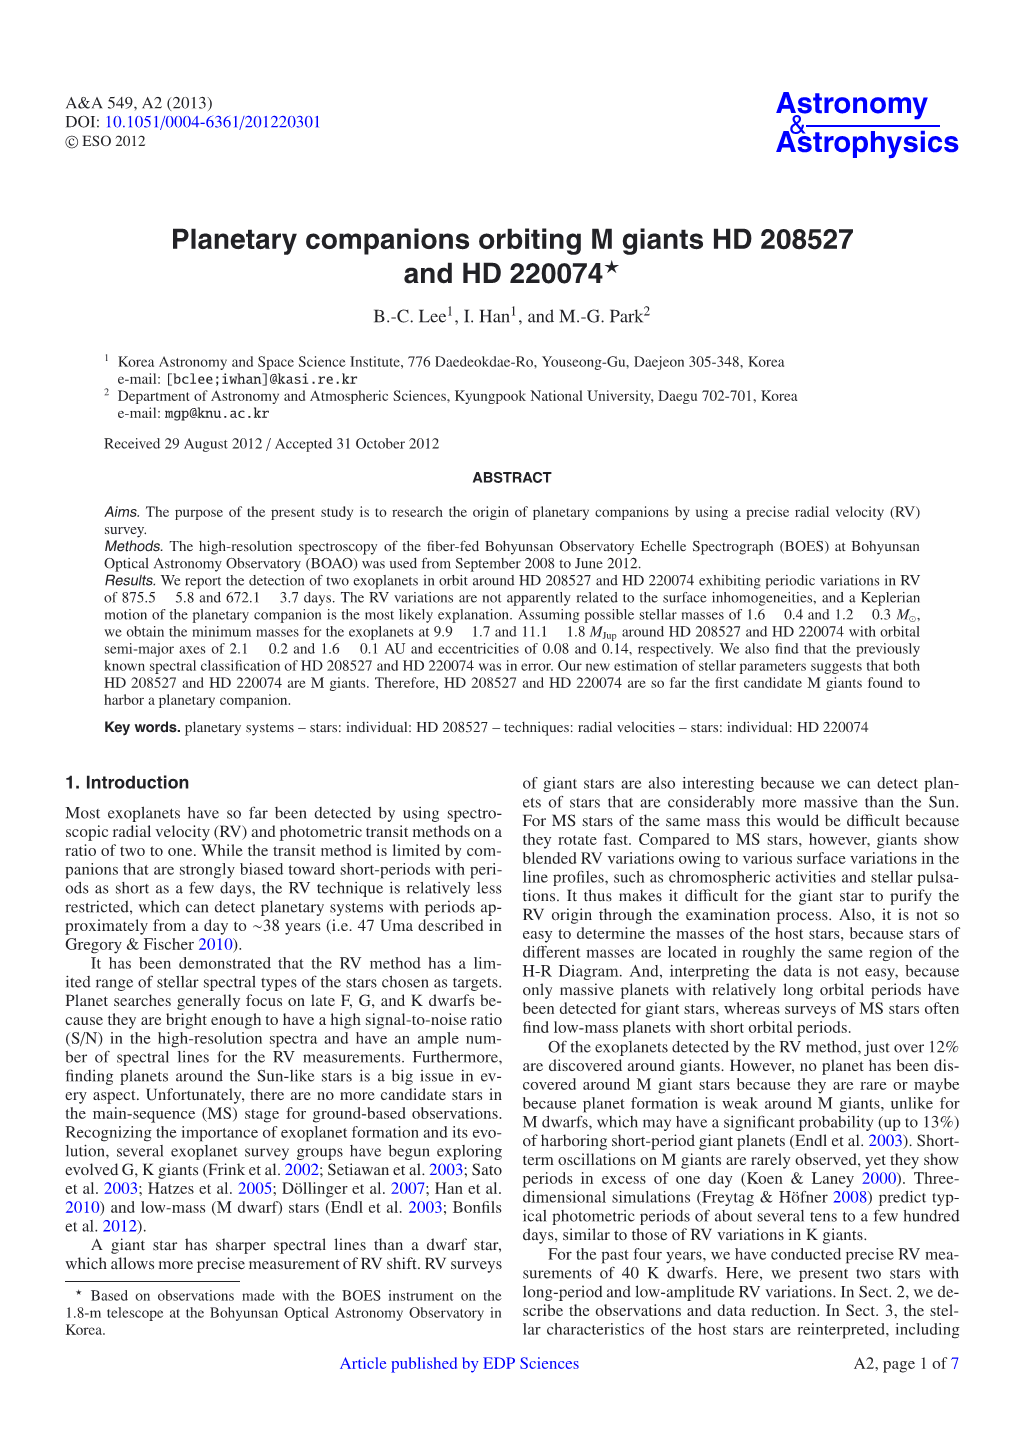 Planetary Companions Orbiting M Giants HD 208527 and HD 220074⋆